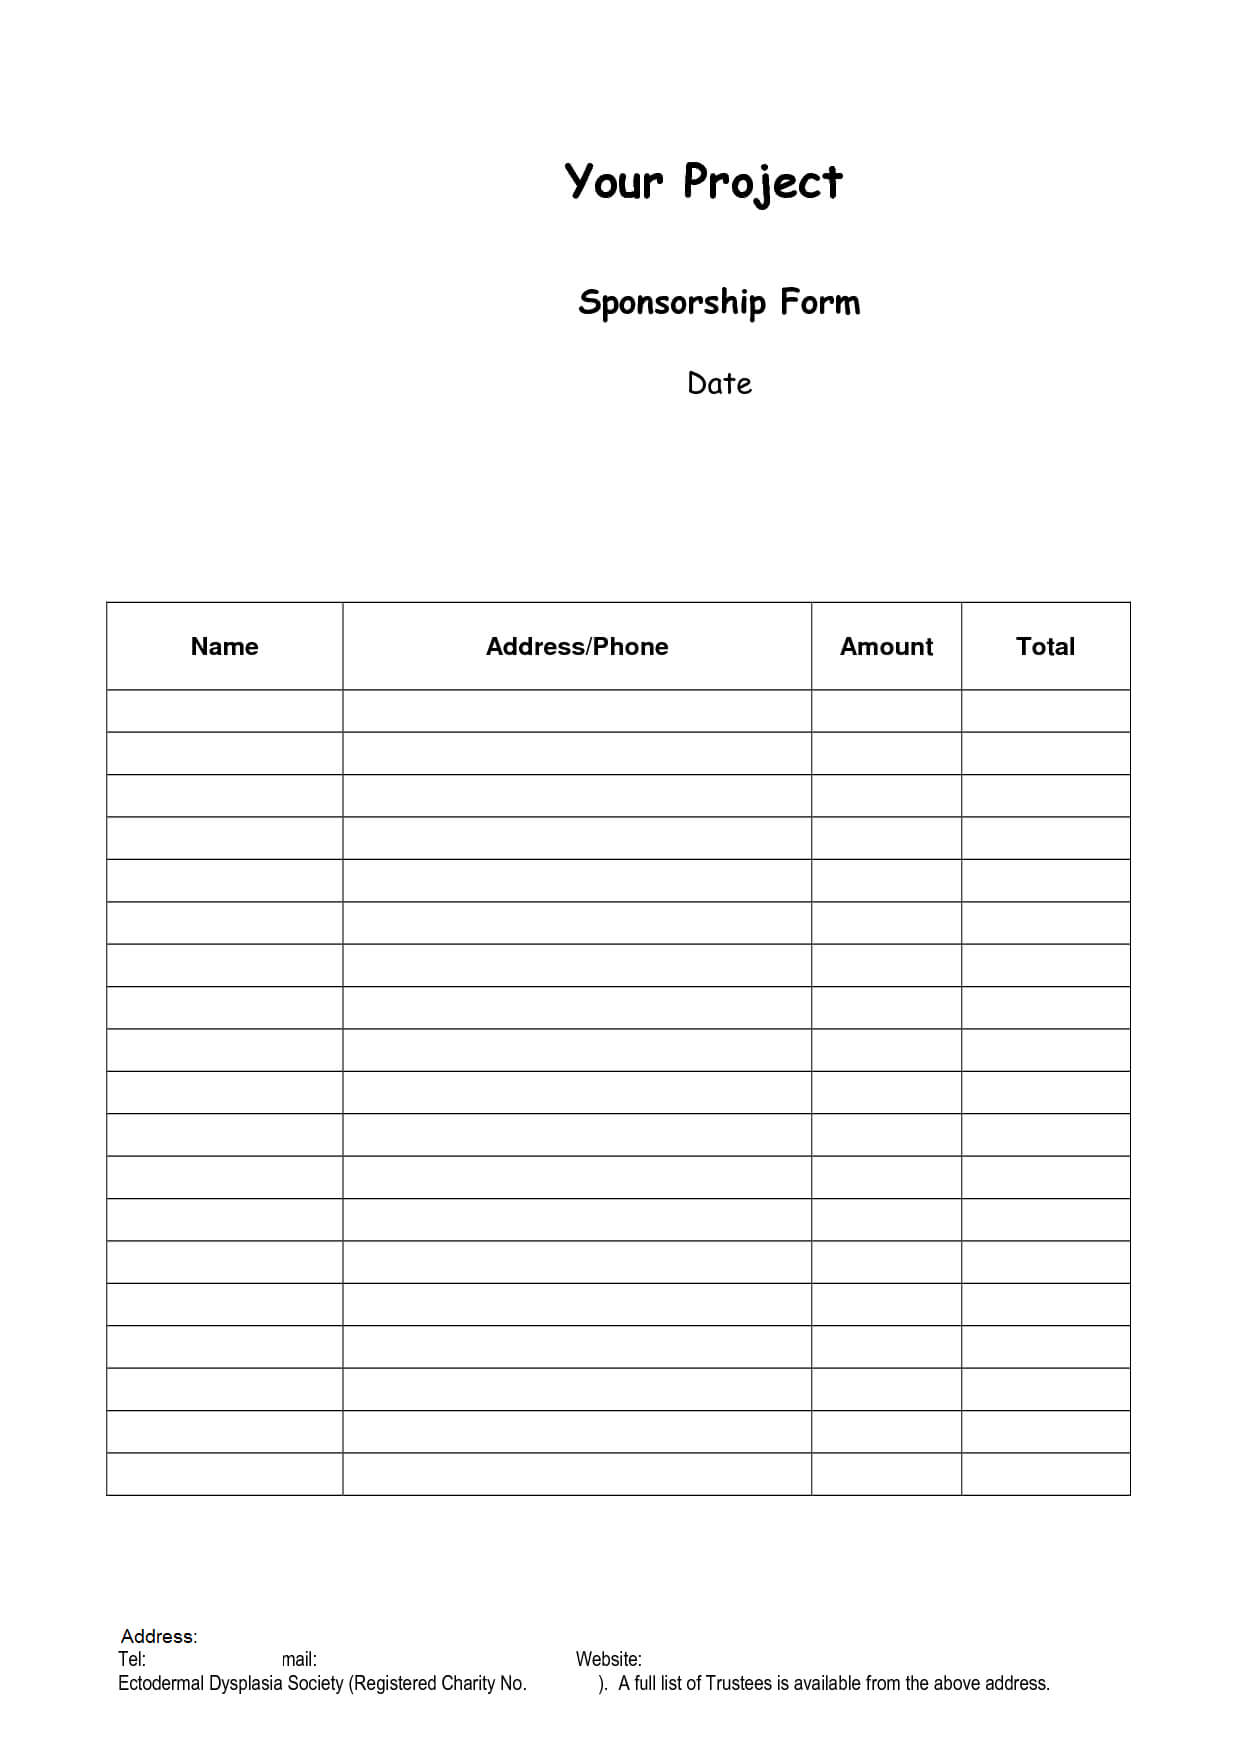 Sponsor Forms Template. Example Sponsor Form Basic Order In Blank Sponsorship Form Template